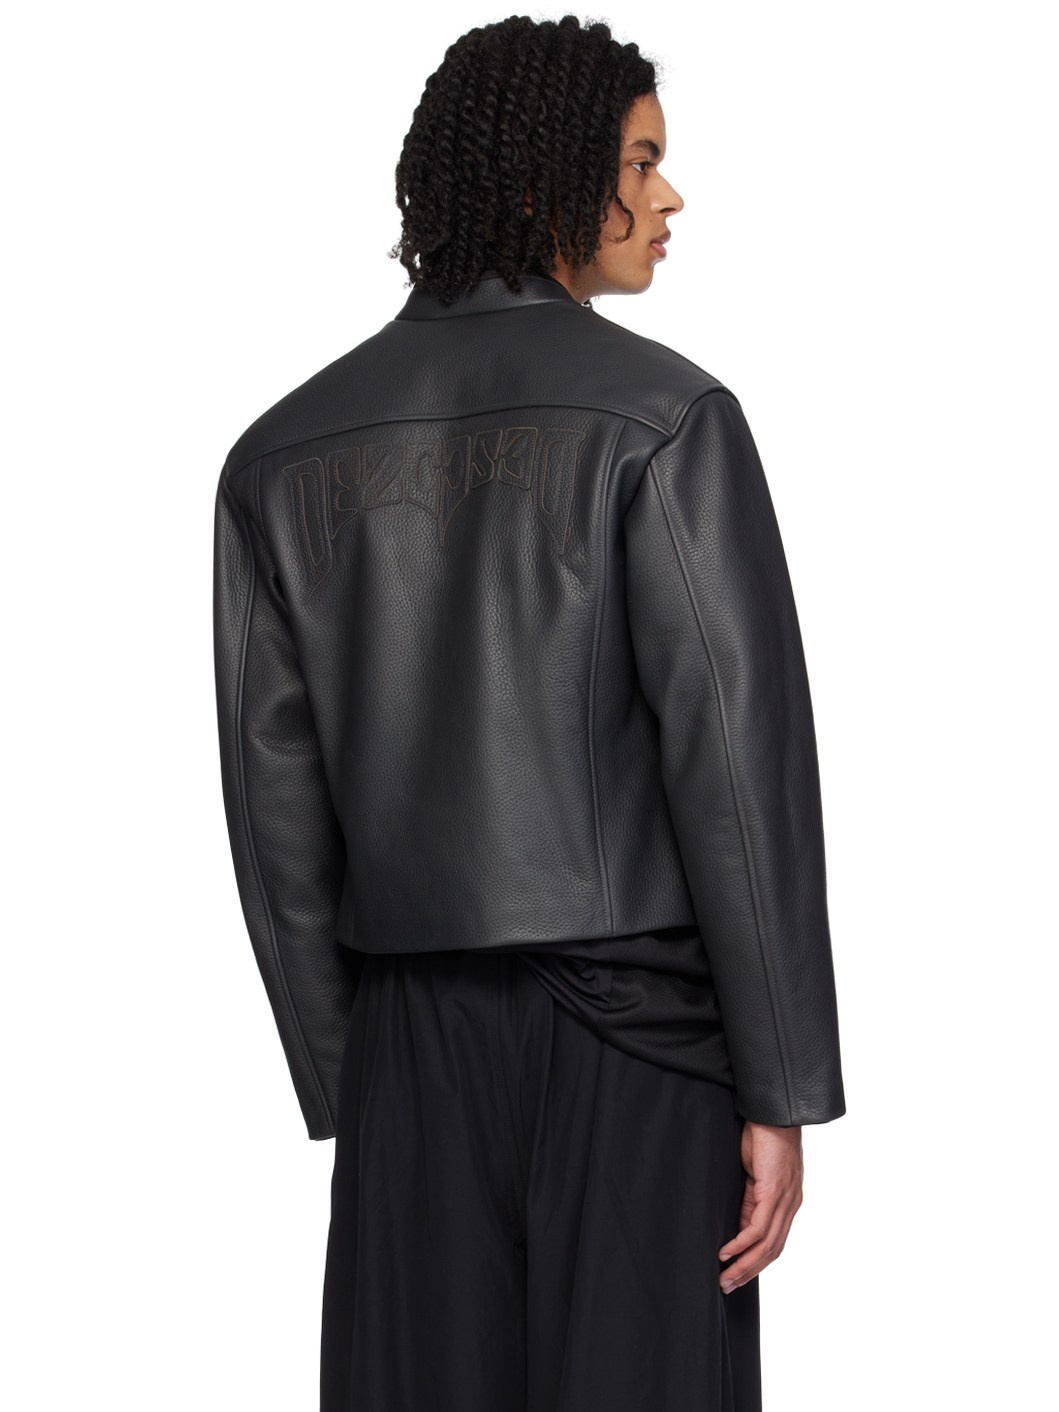 Black Attrition Leather Jacket - 3